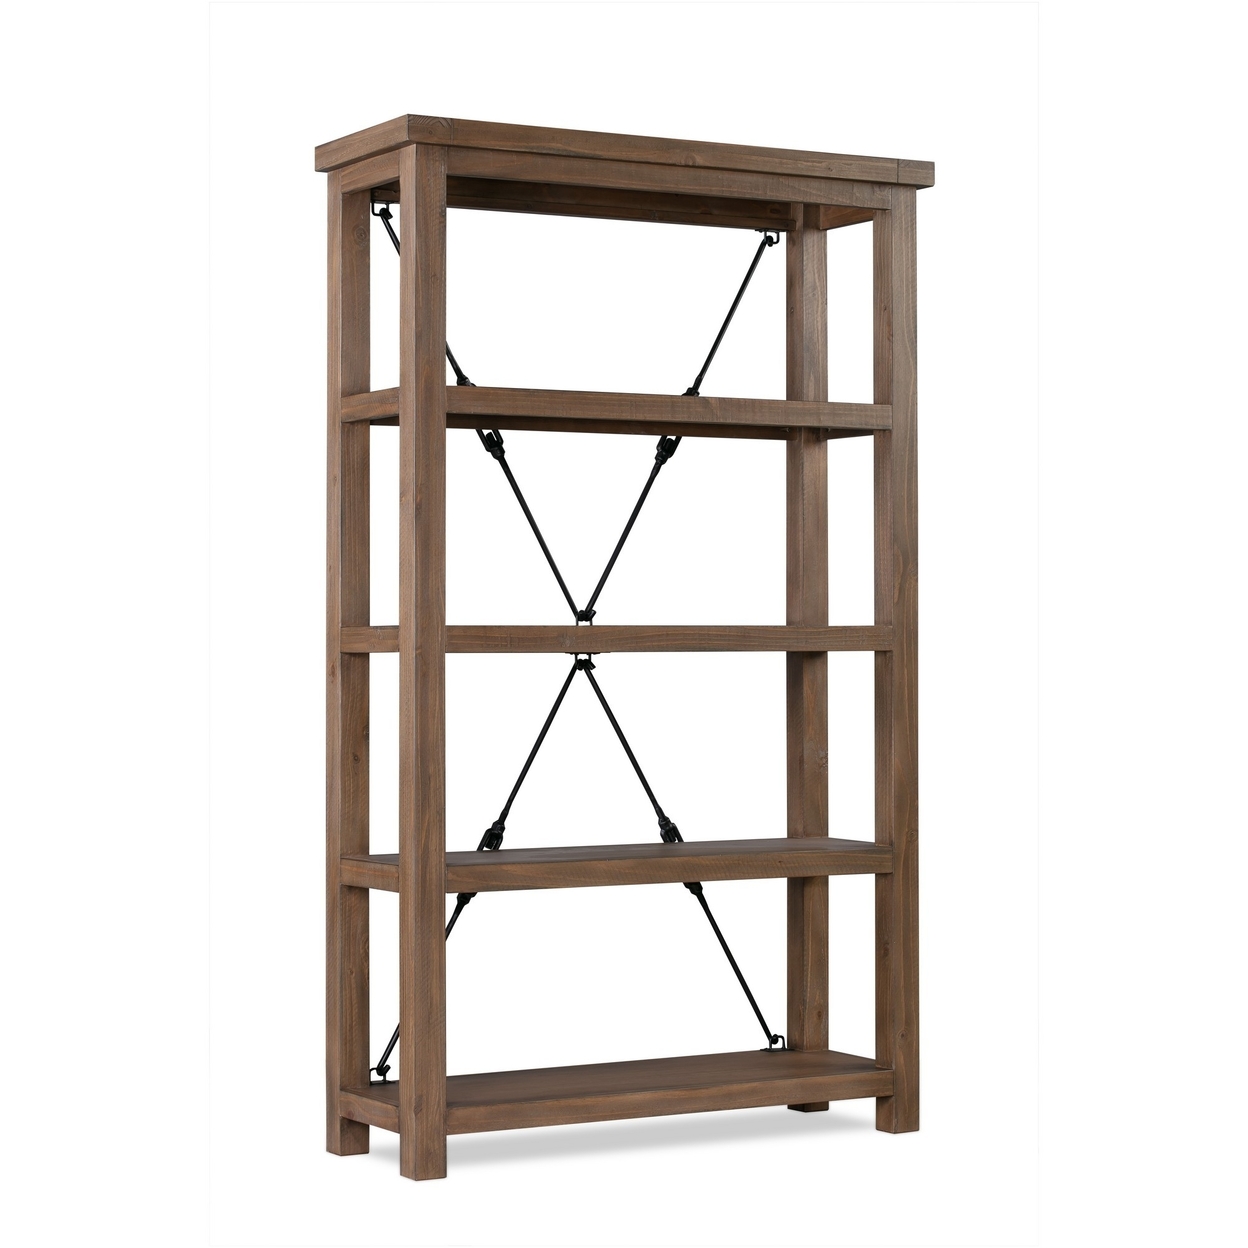 Embur 76 Inch 4 Tier Bookcase Display Unit, 4 Shelves, Brown Wood, Crossed- Saltoro Sherpi